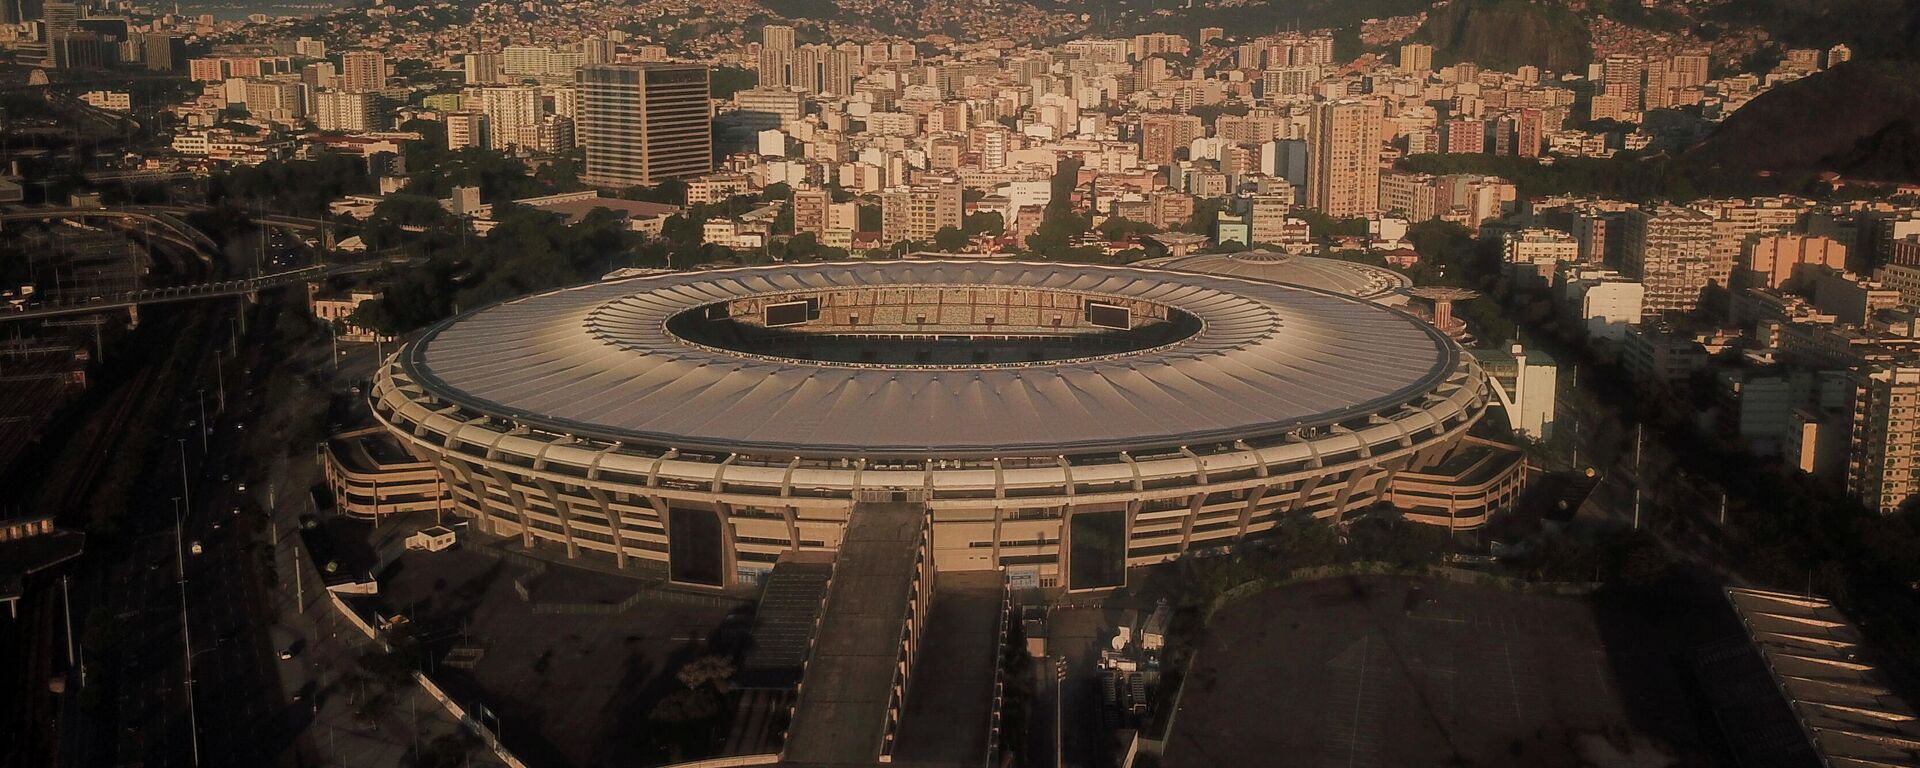 El estadio Maracana en Río de Janeiro en Brasil - Sputnik Mundo, 1920, 07.06.2021